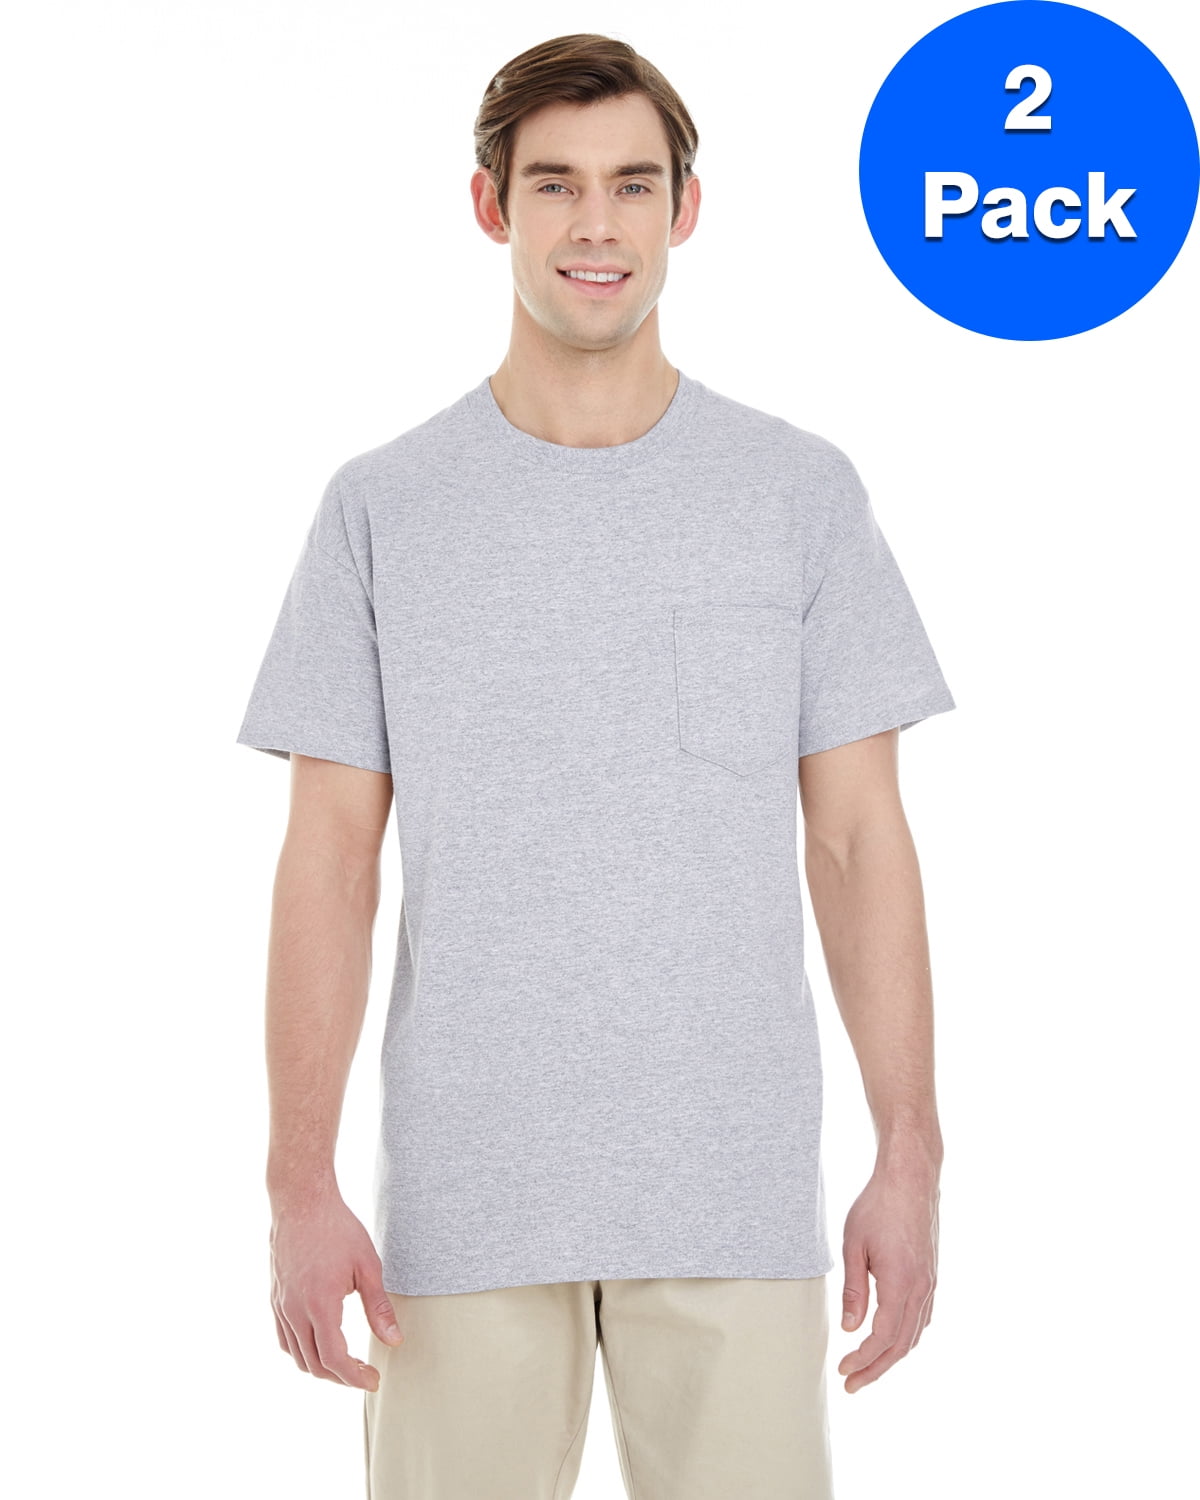 Mens Heavy Cotton T-Shirt with a Pocket 2 Pack - Walmart.com